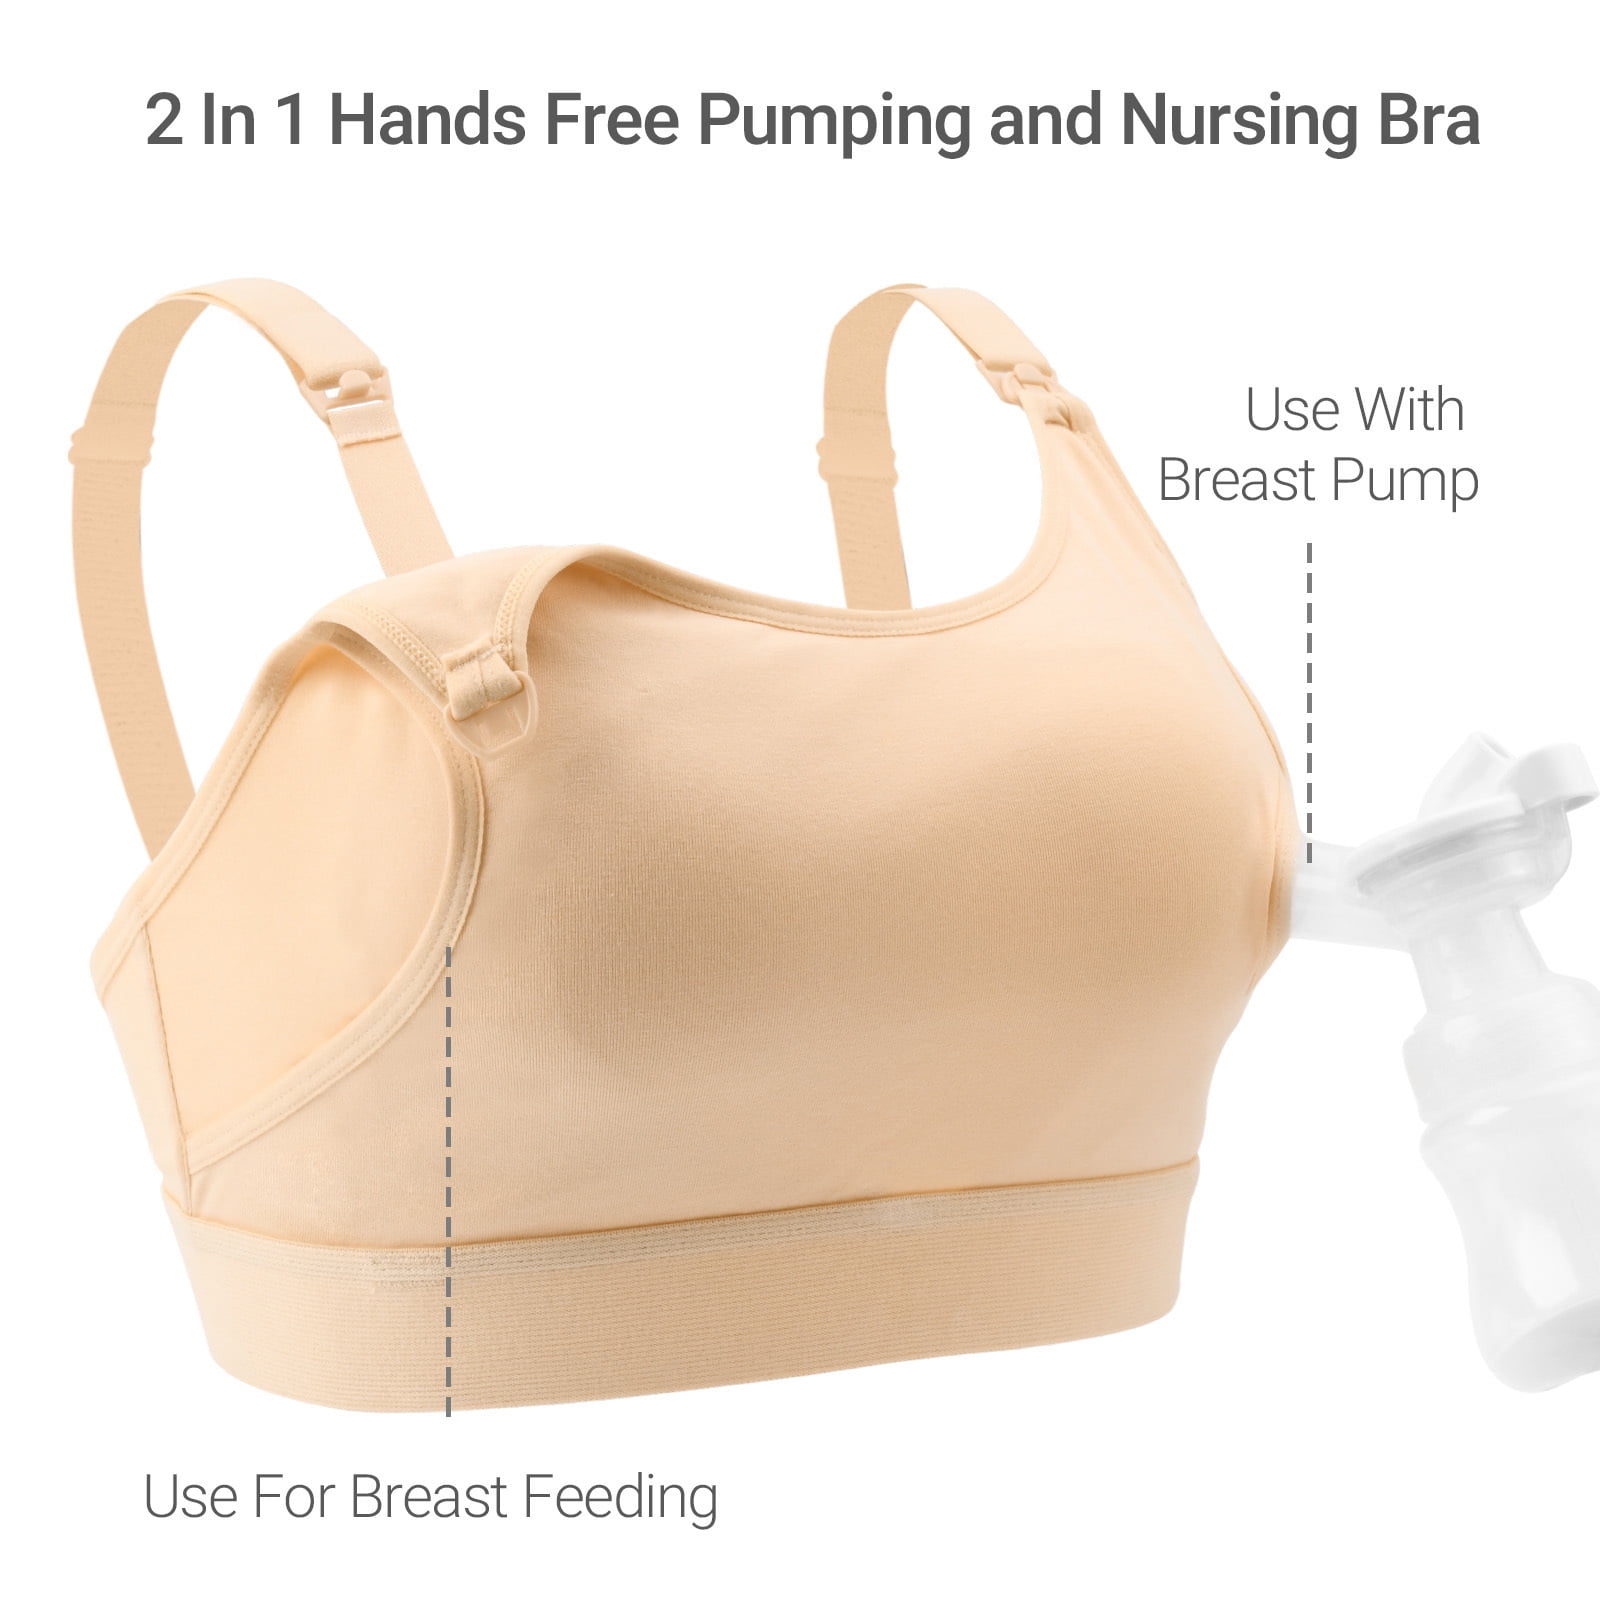 Hands Free Pumping Bra, Momcozy Adjustable Breast-Pumps